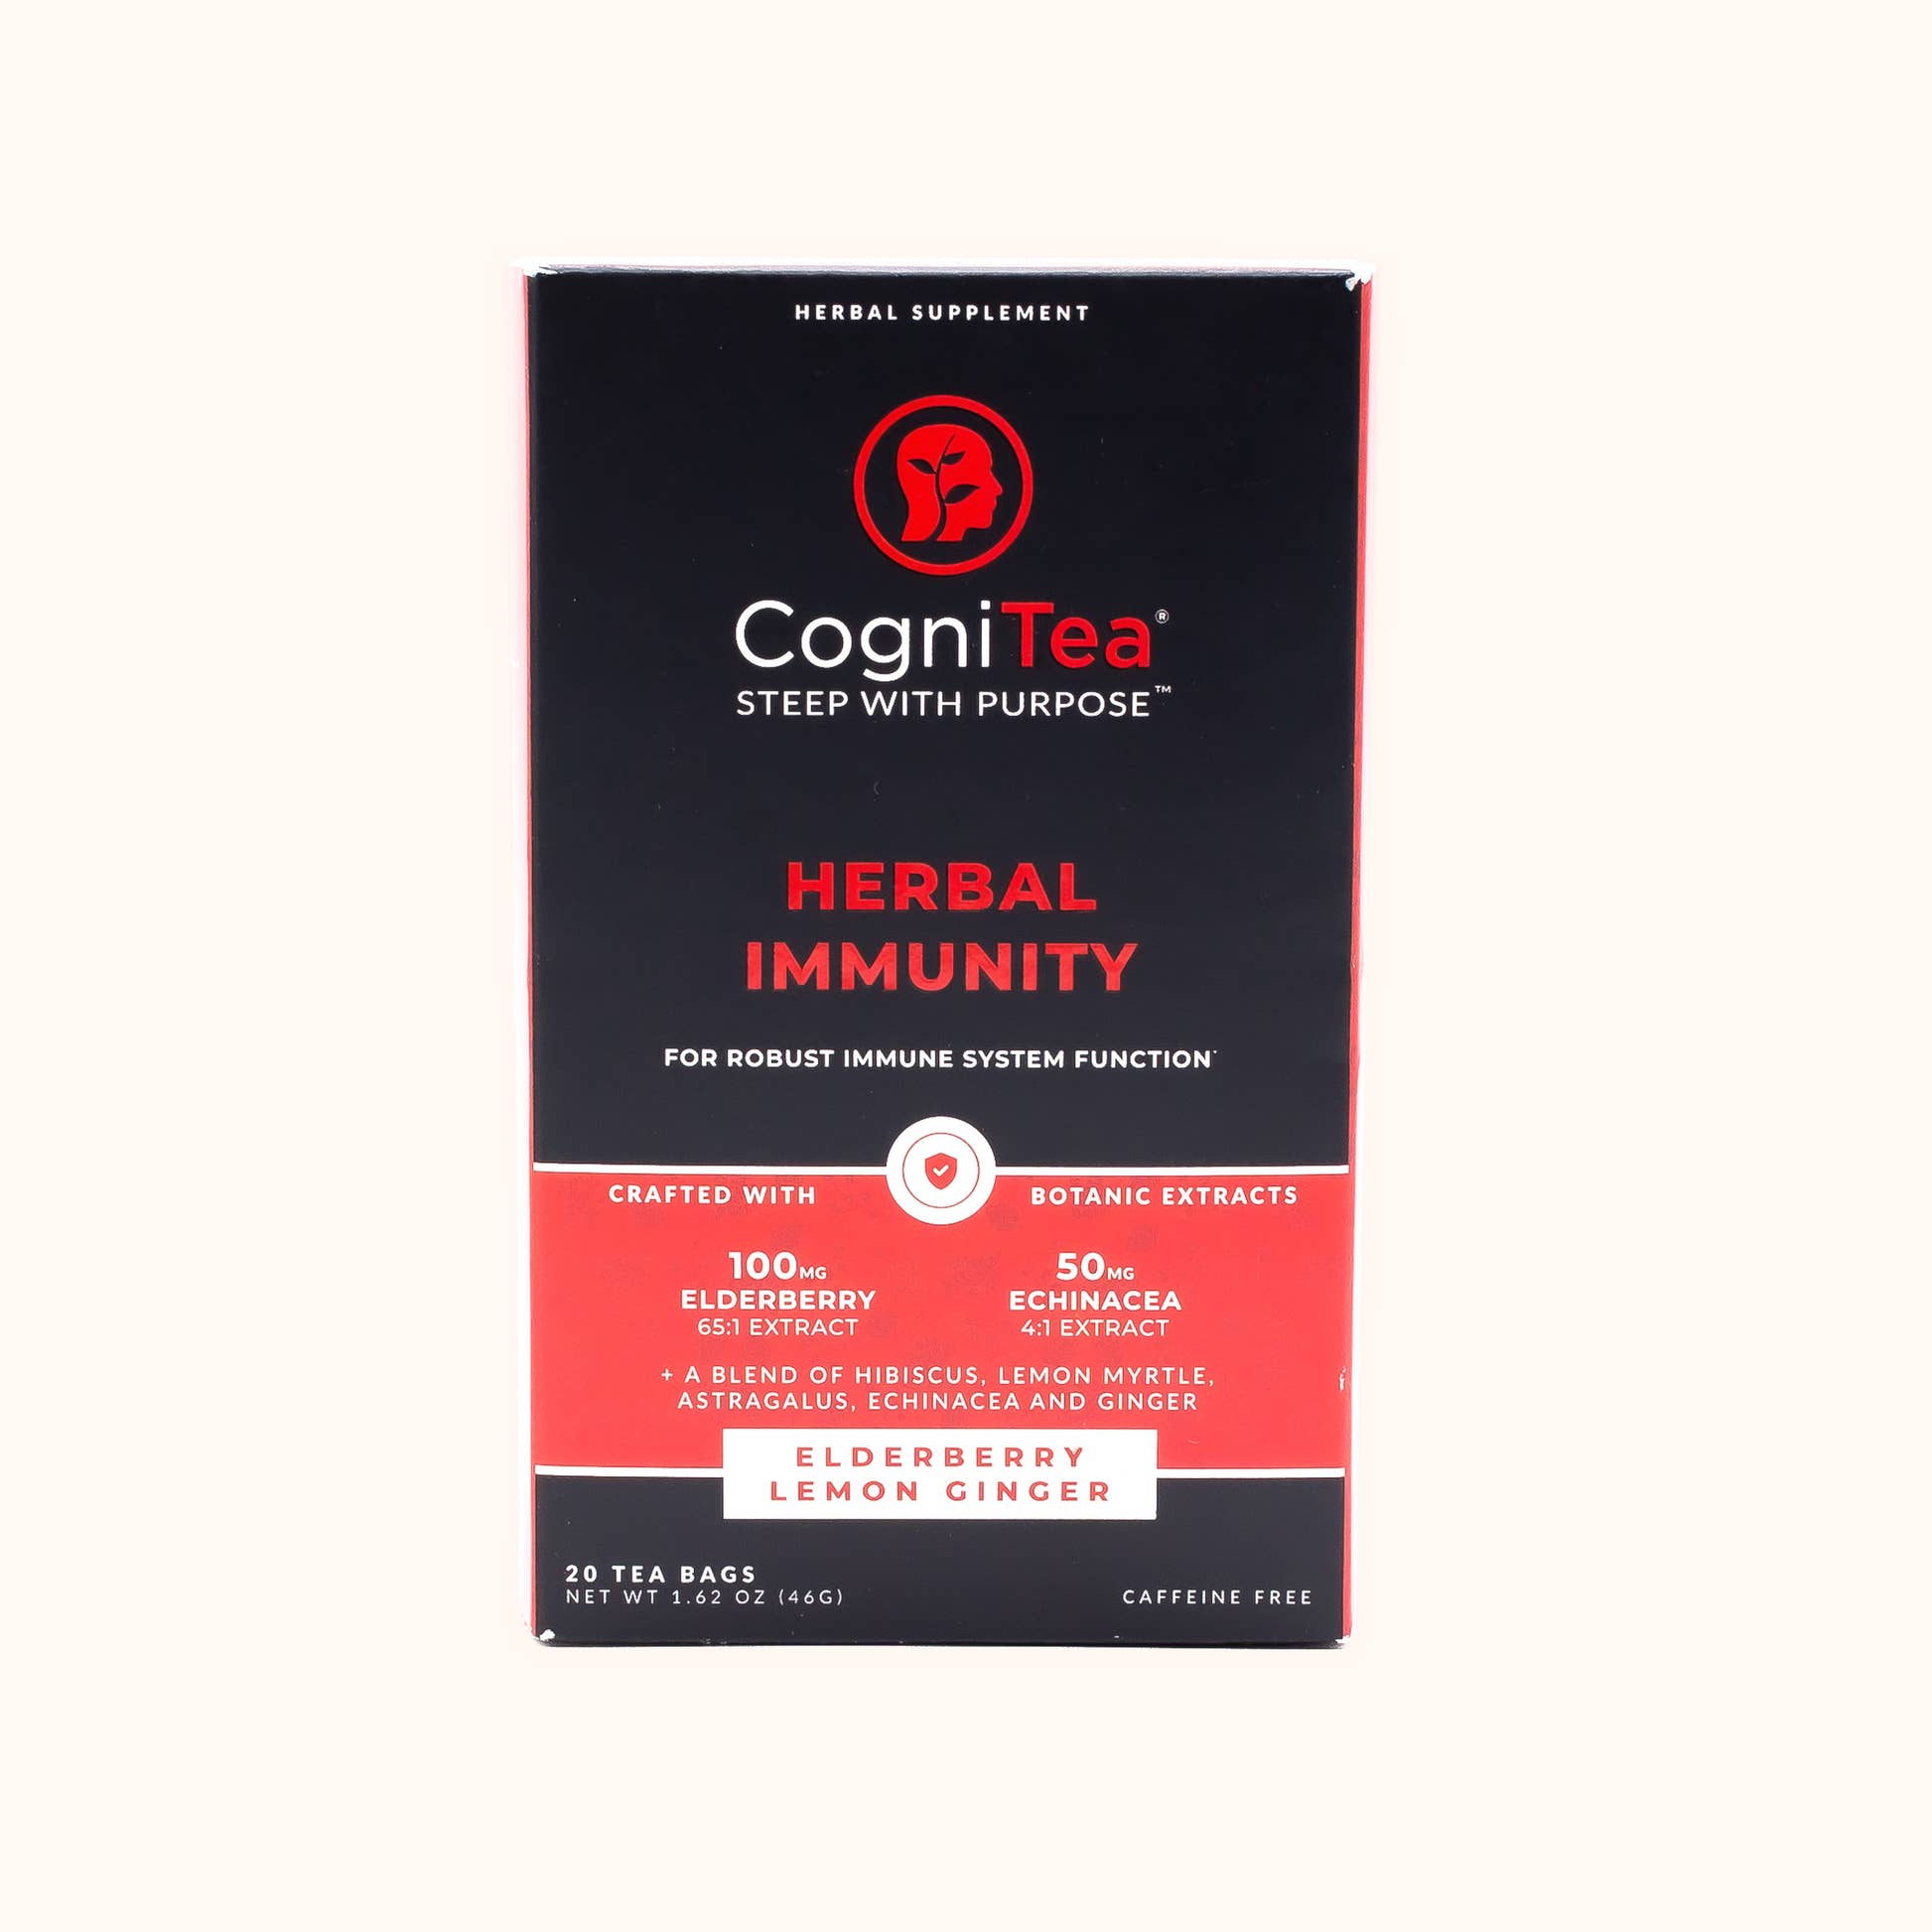 Black and red Herbal Immunity by CogniTea tea box